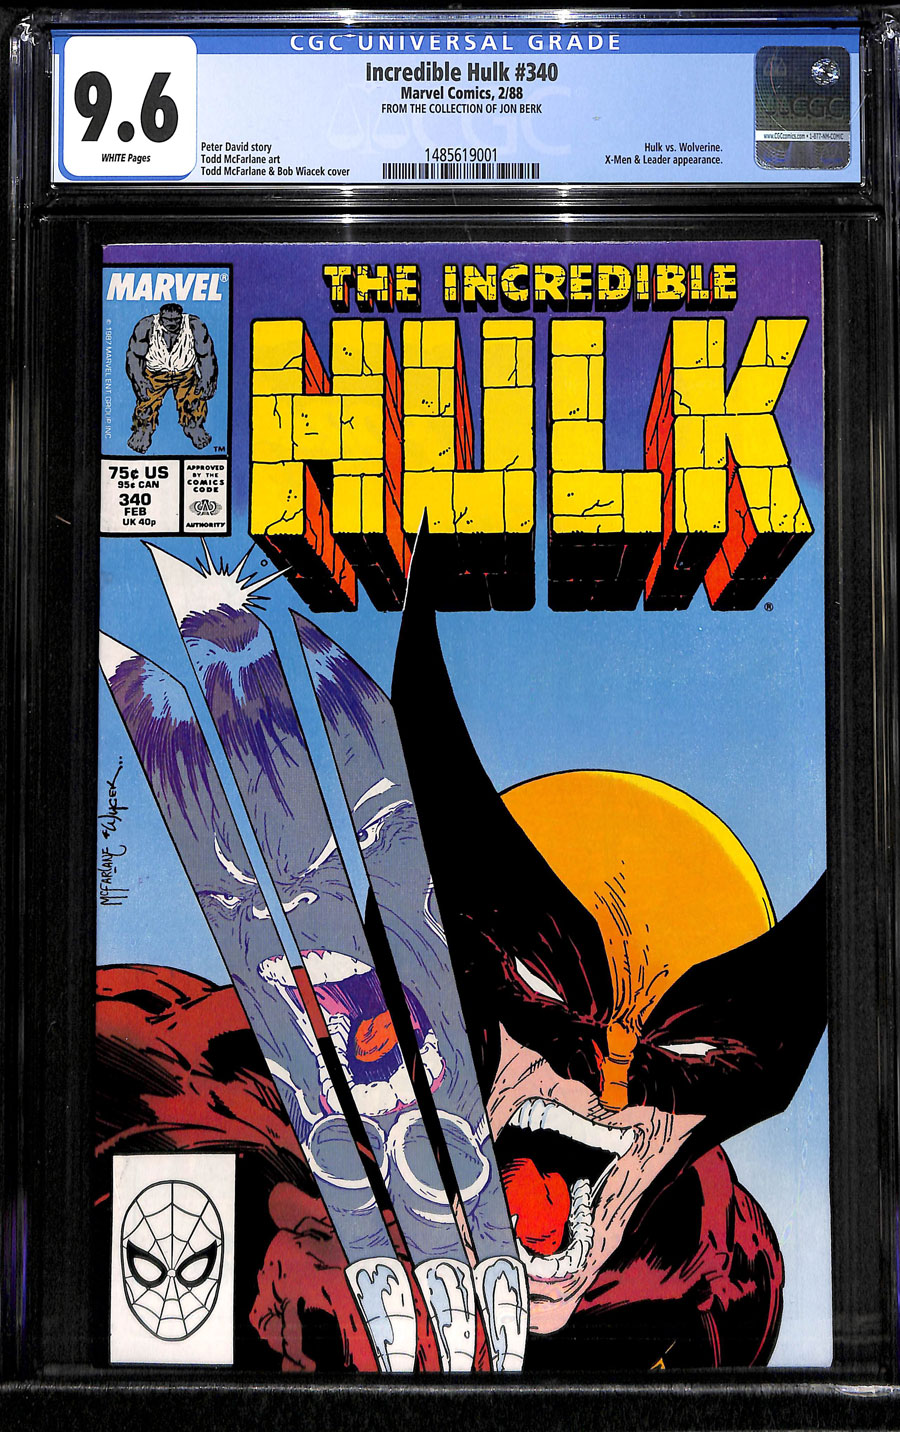 ComicConnect - INCREDIBLE HULK (1962-99) #340 - CGC NM+: 9.6